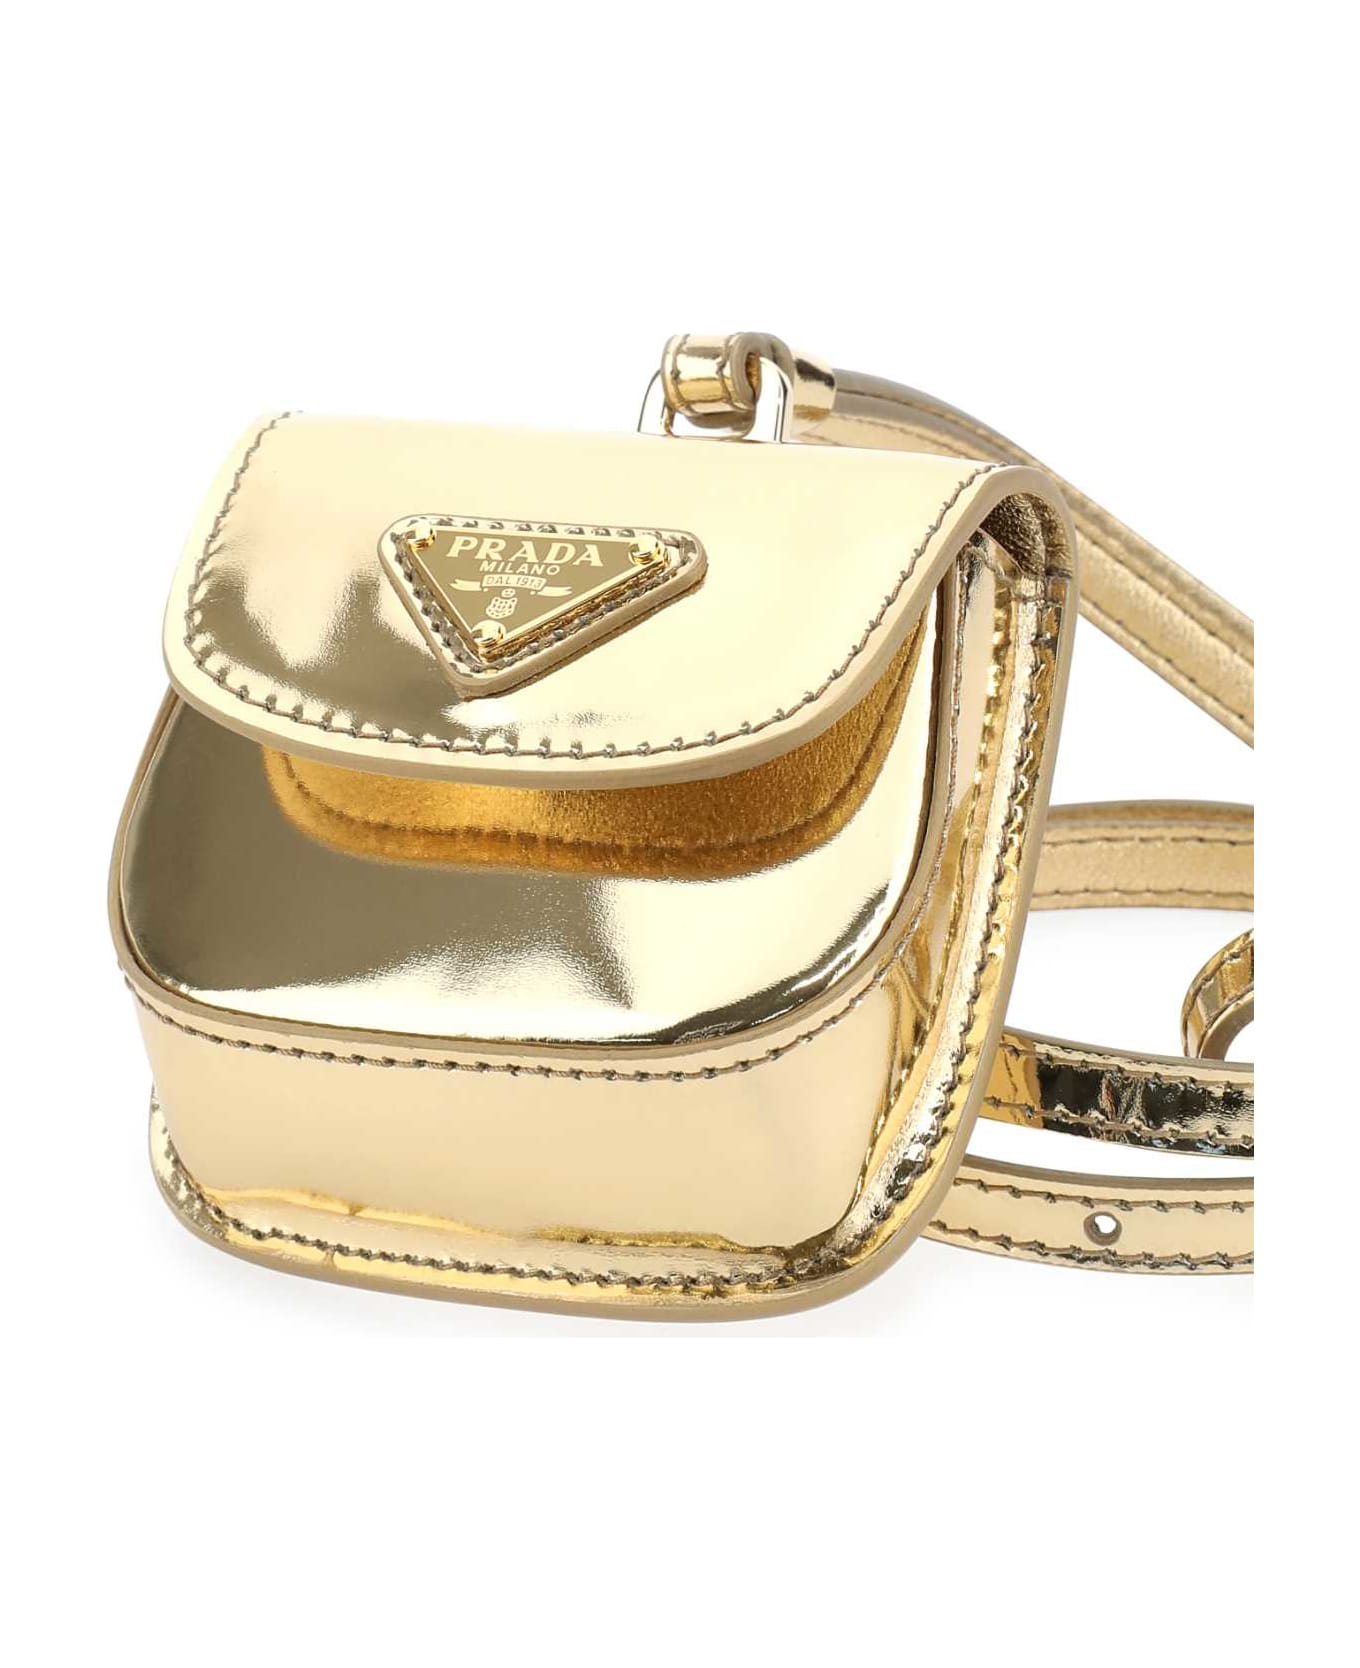 Prada Gold Leather Air Pods Case - Silver デジタルアクセサリー